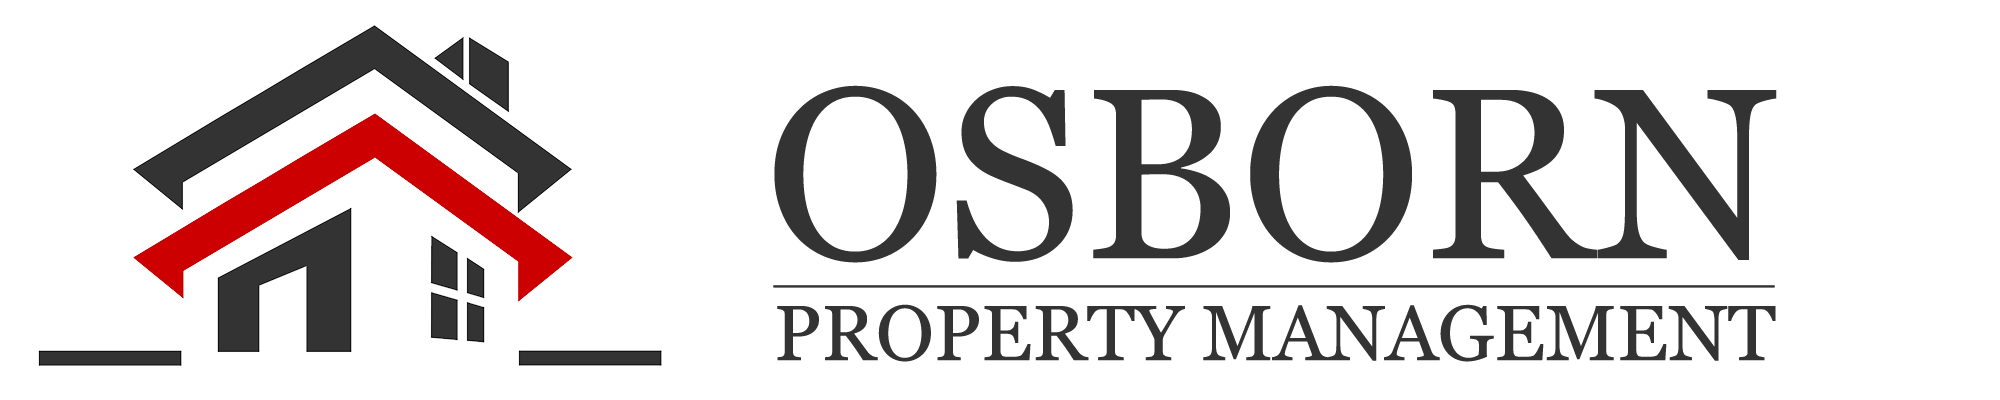 Osborn Property Management